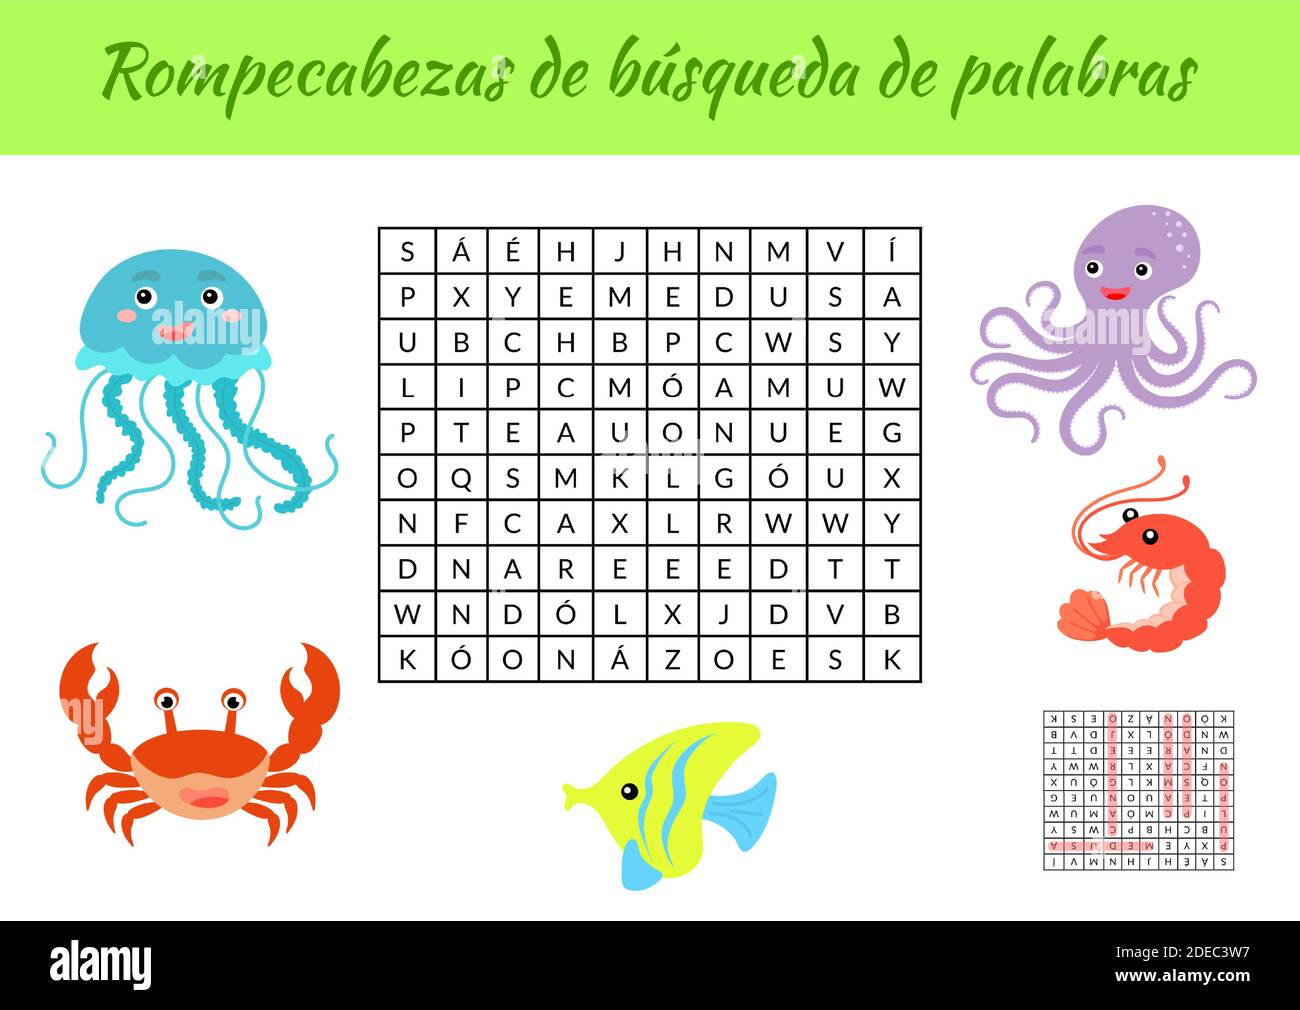 Rompecabezas de búsqueda de palabras - Word search puzzle. Educational game for study Spanish words. Kids activity worksheet Stock Vector